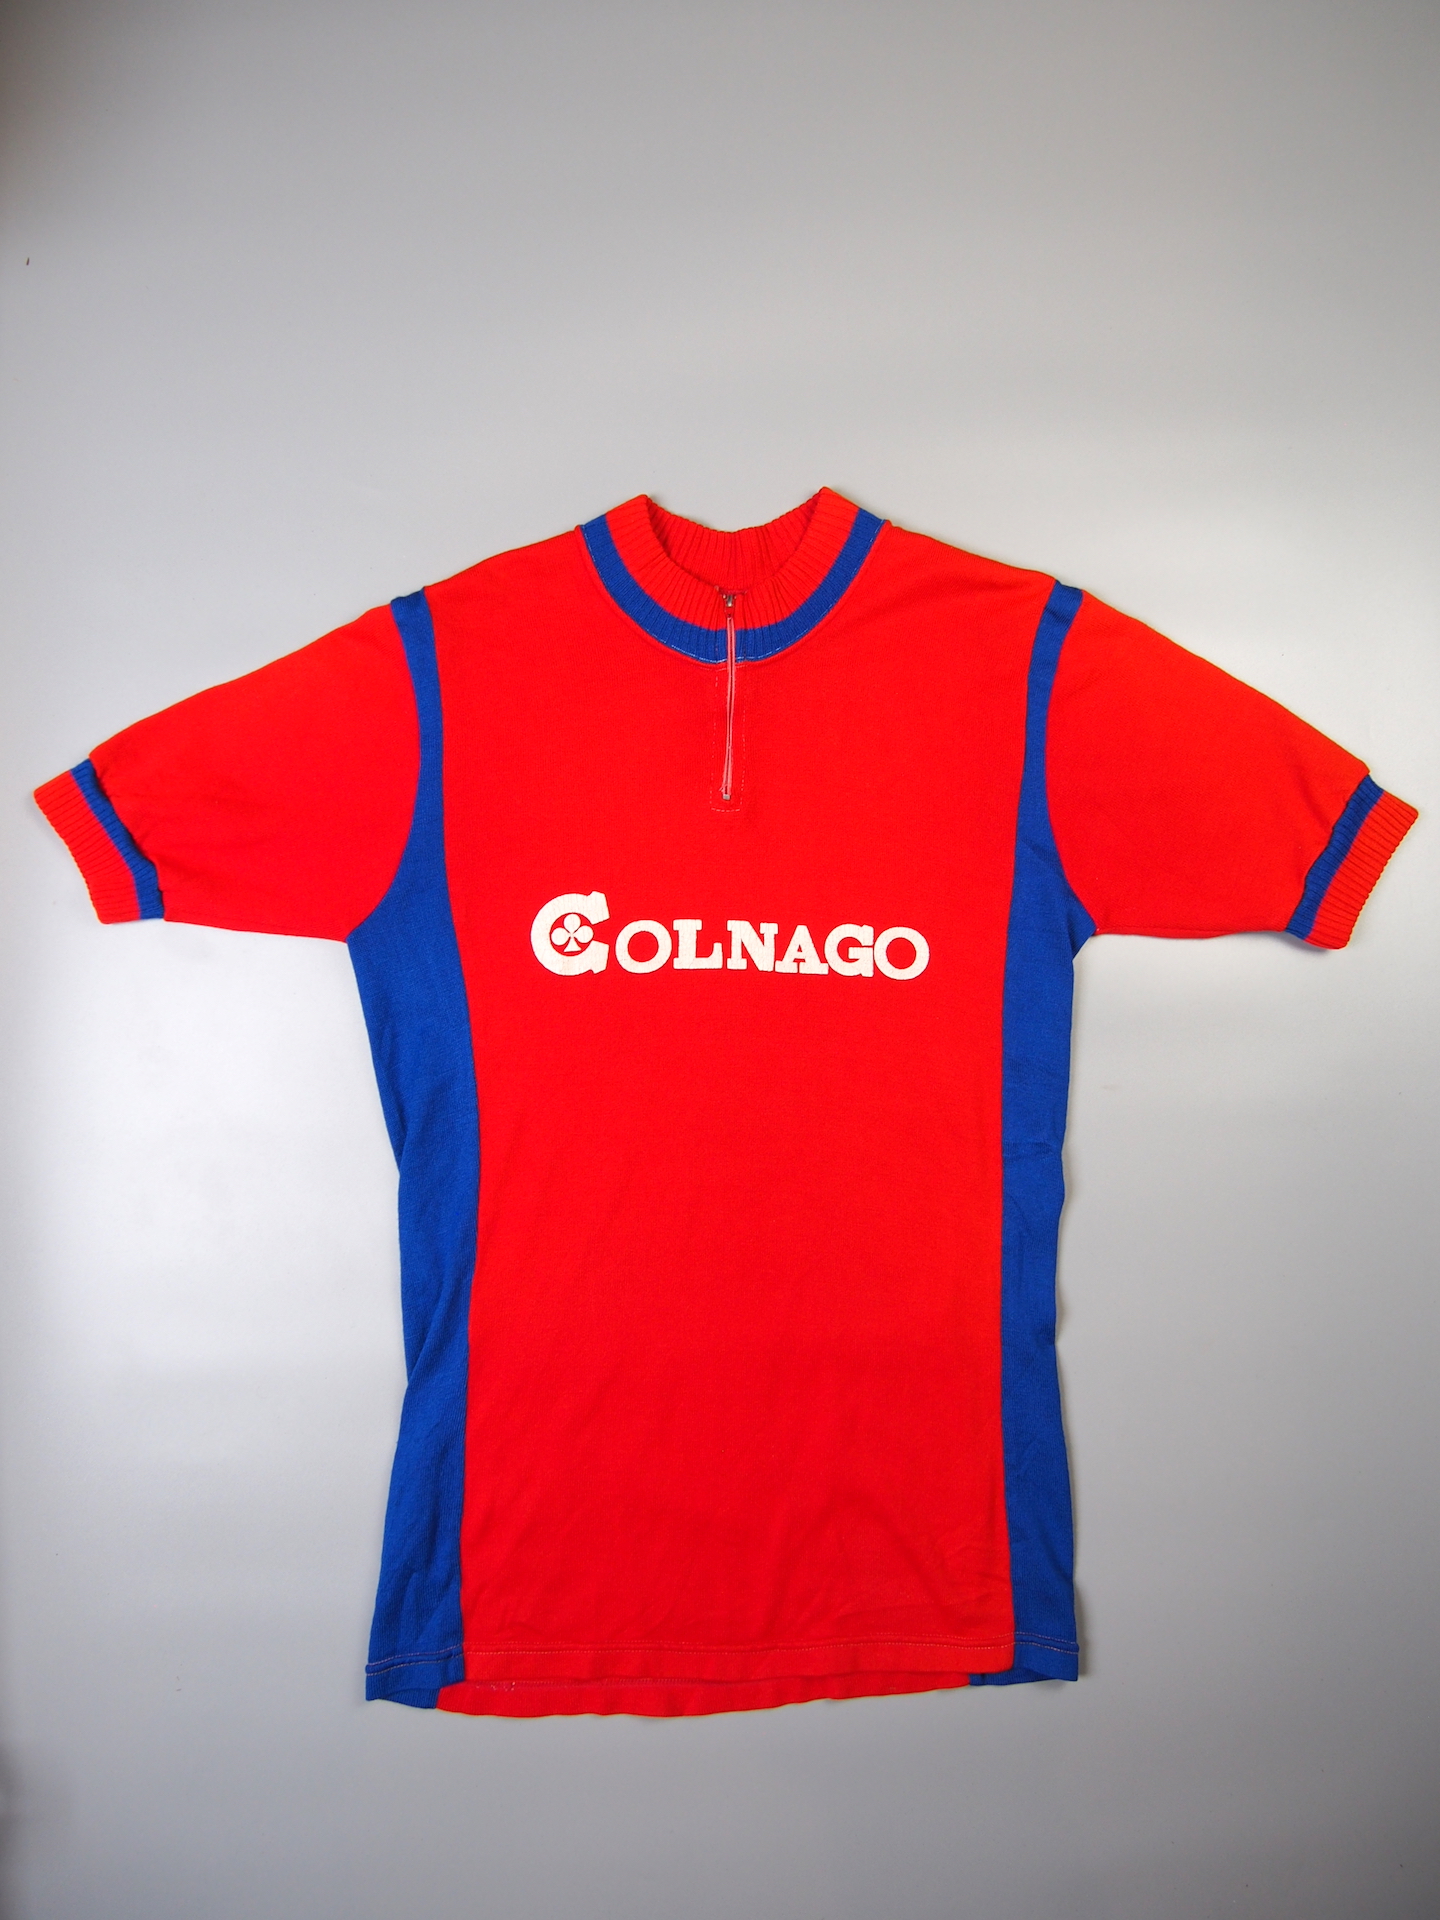 Torralba 'Colnago' Woollen Style Short Sleeved jersey – Red & Blue